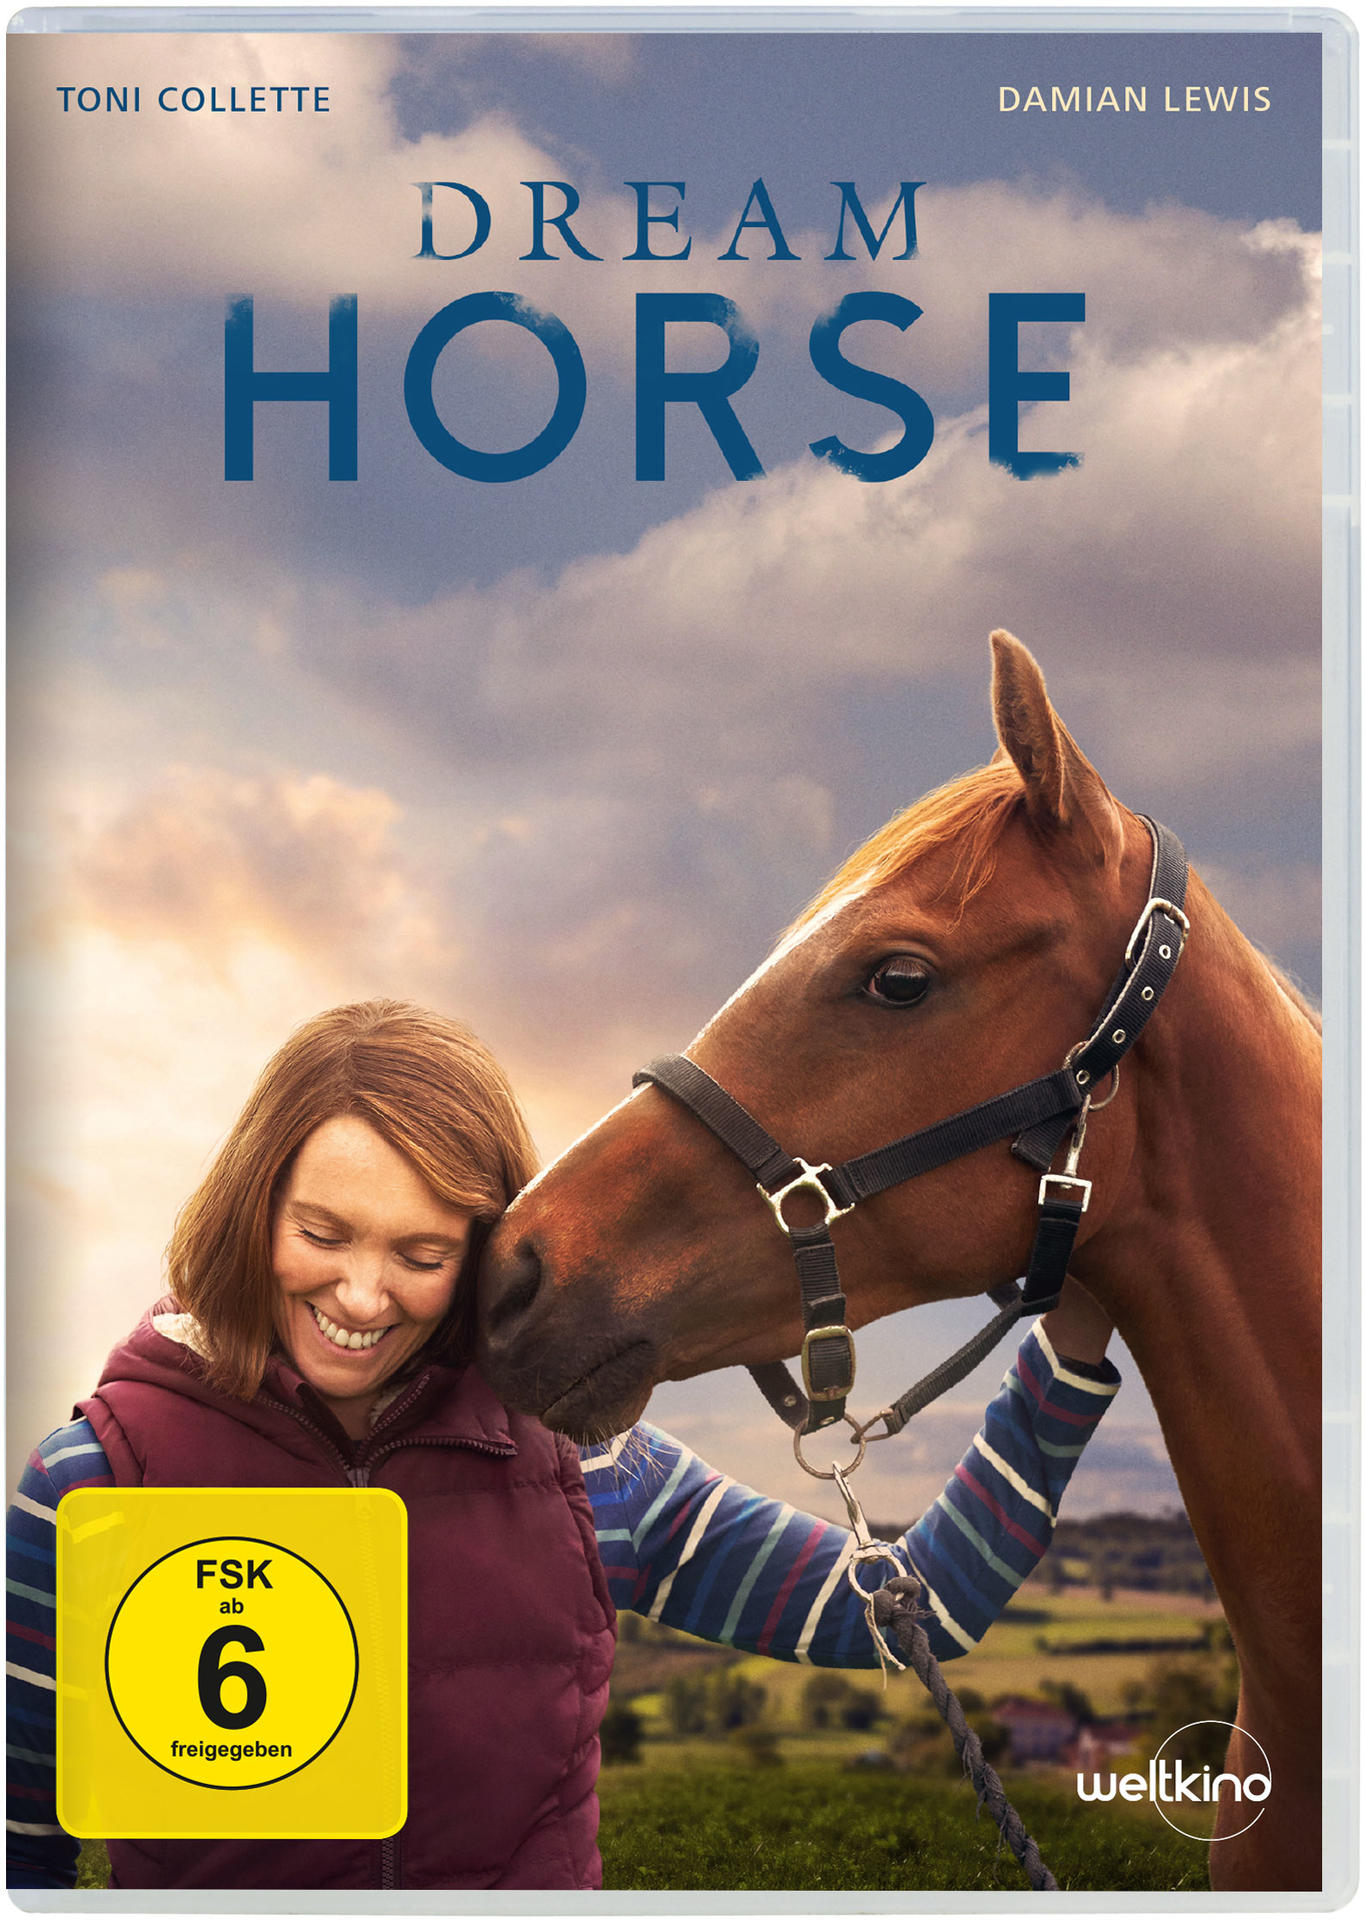 Dream DVD Horse